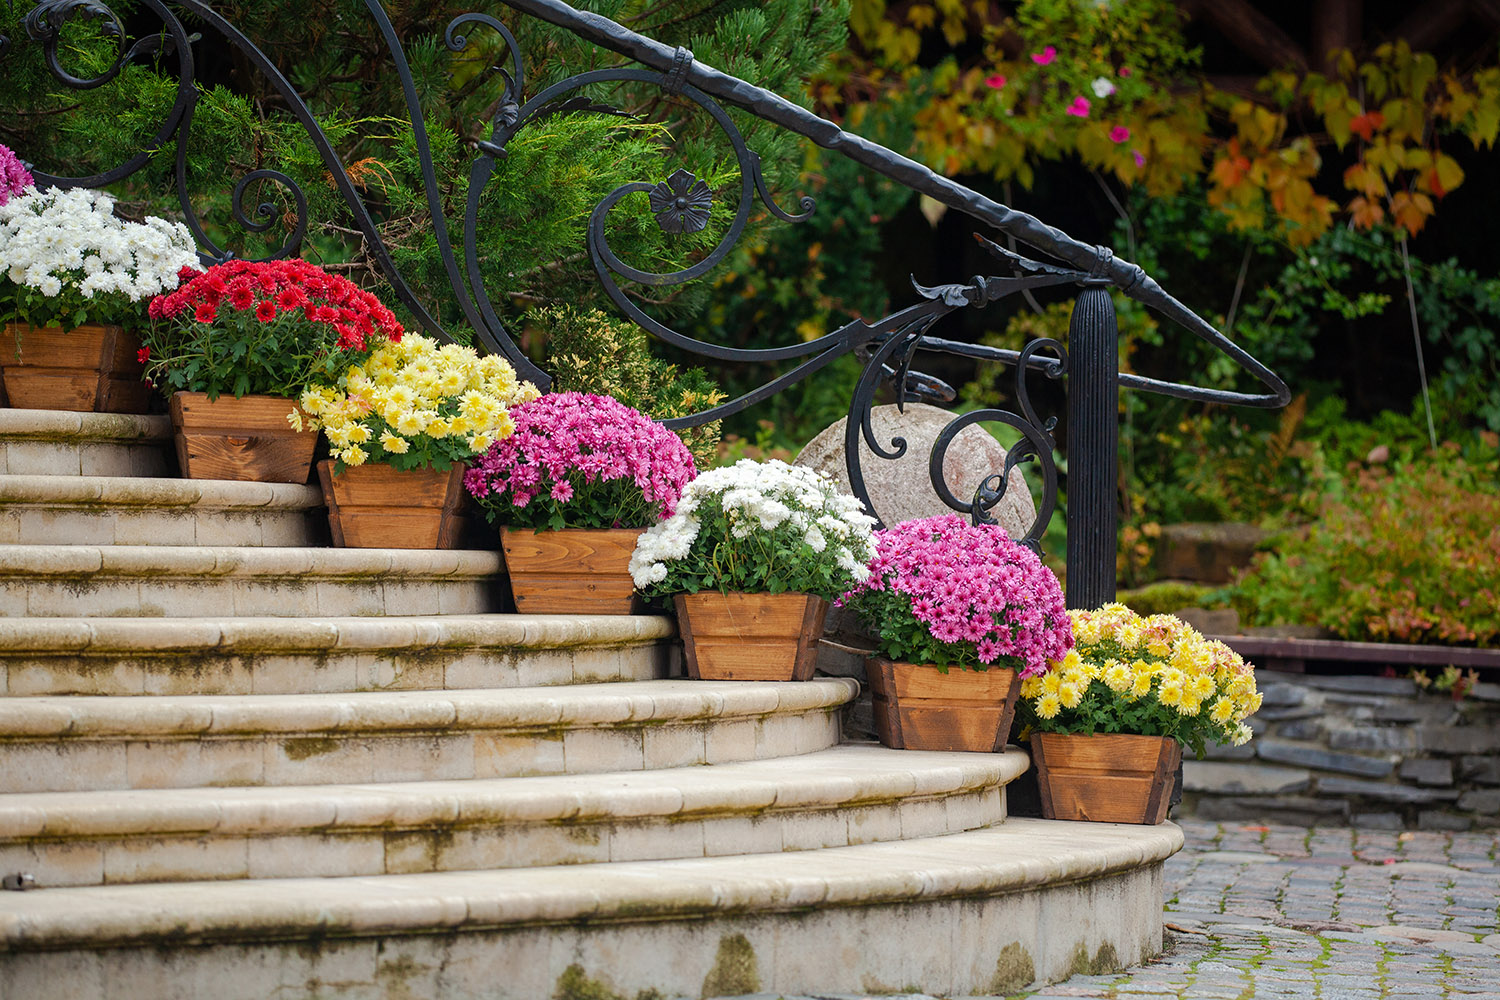 Steps with chrysanthemum pots